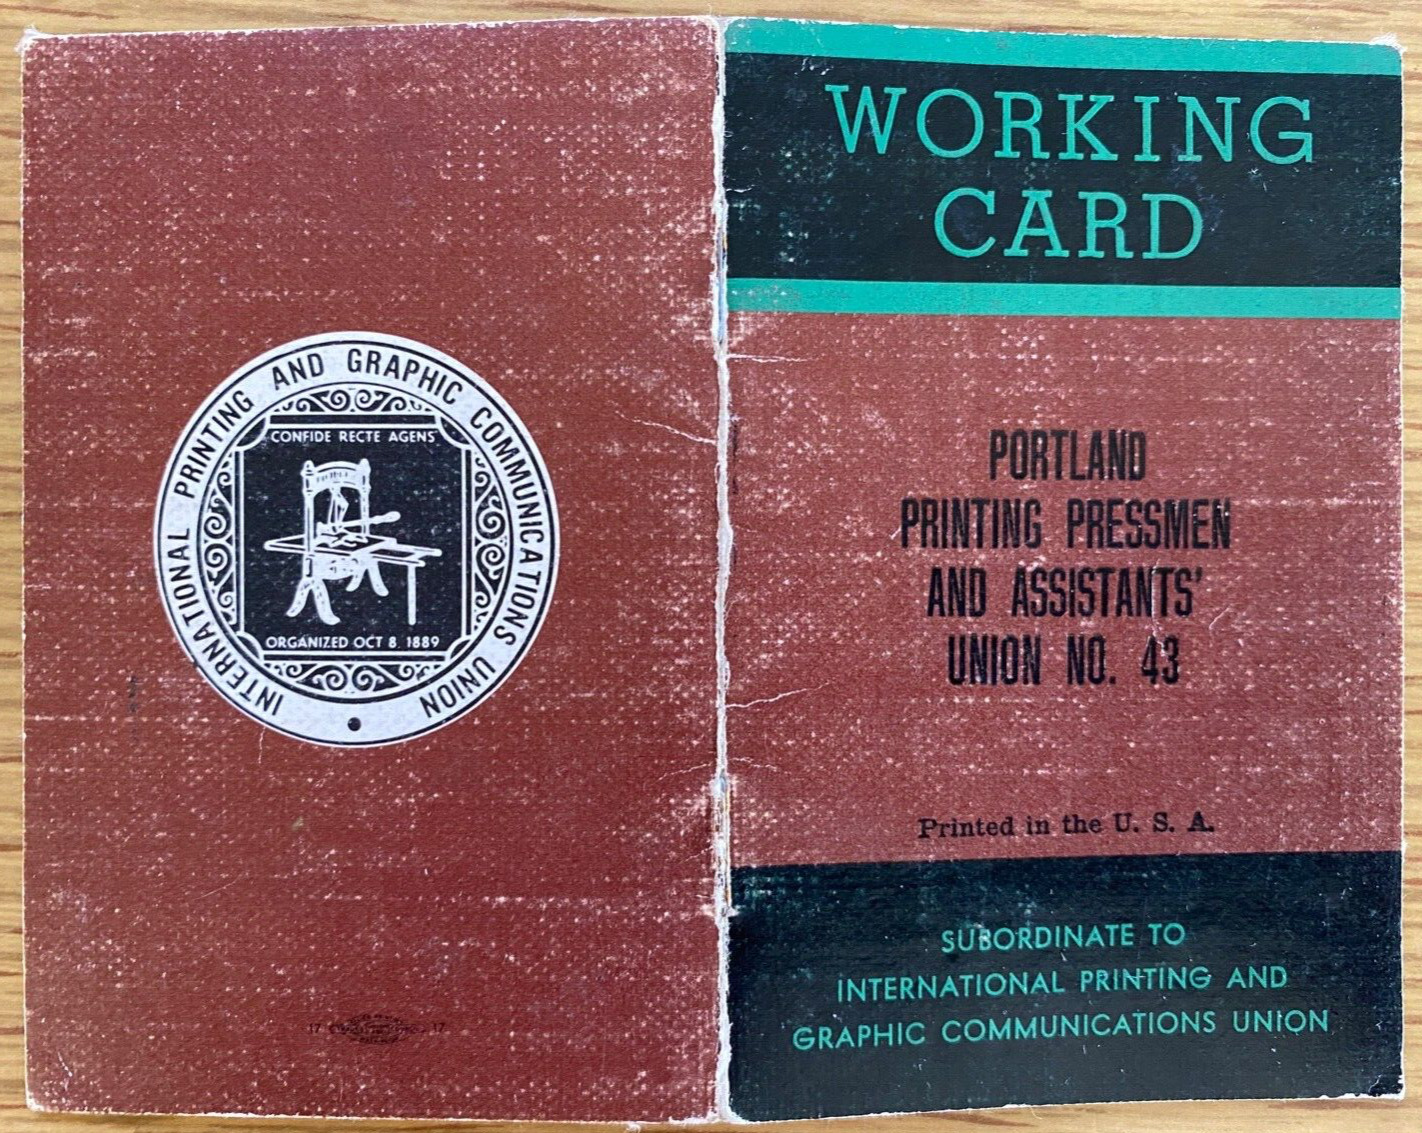 1979-1981 PRINTING PRESSMEN UNION NO. 43 vintage dues booklet PORTLAND, OREGON